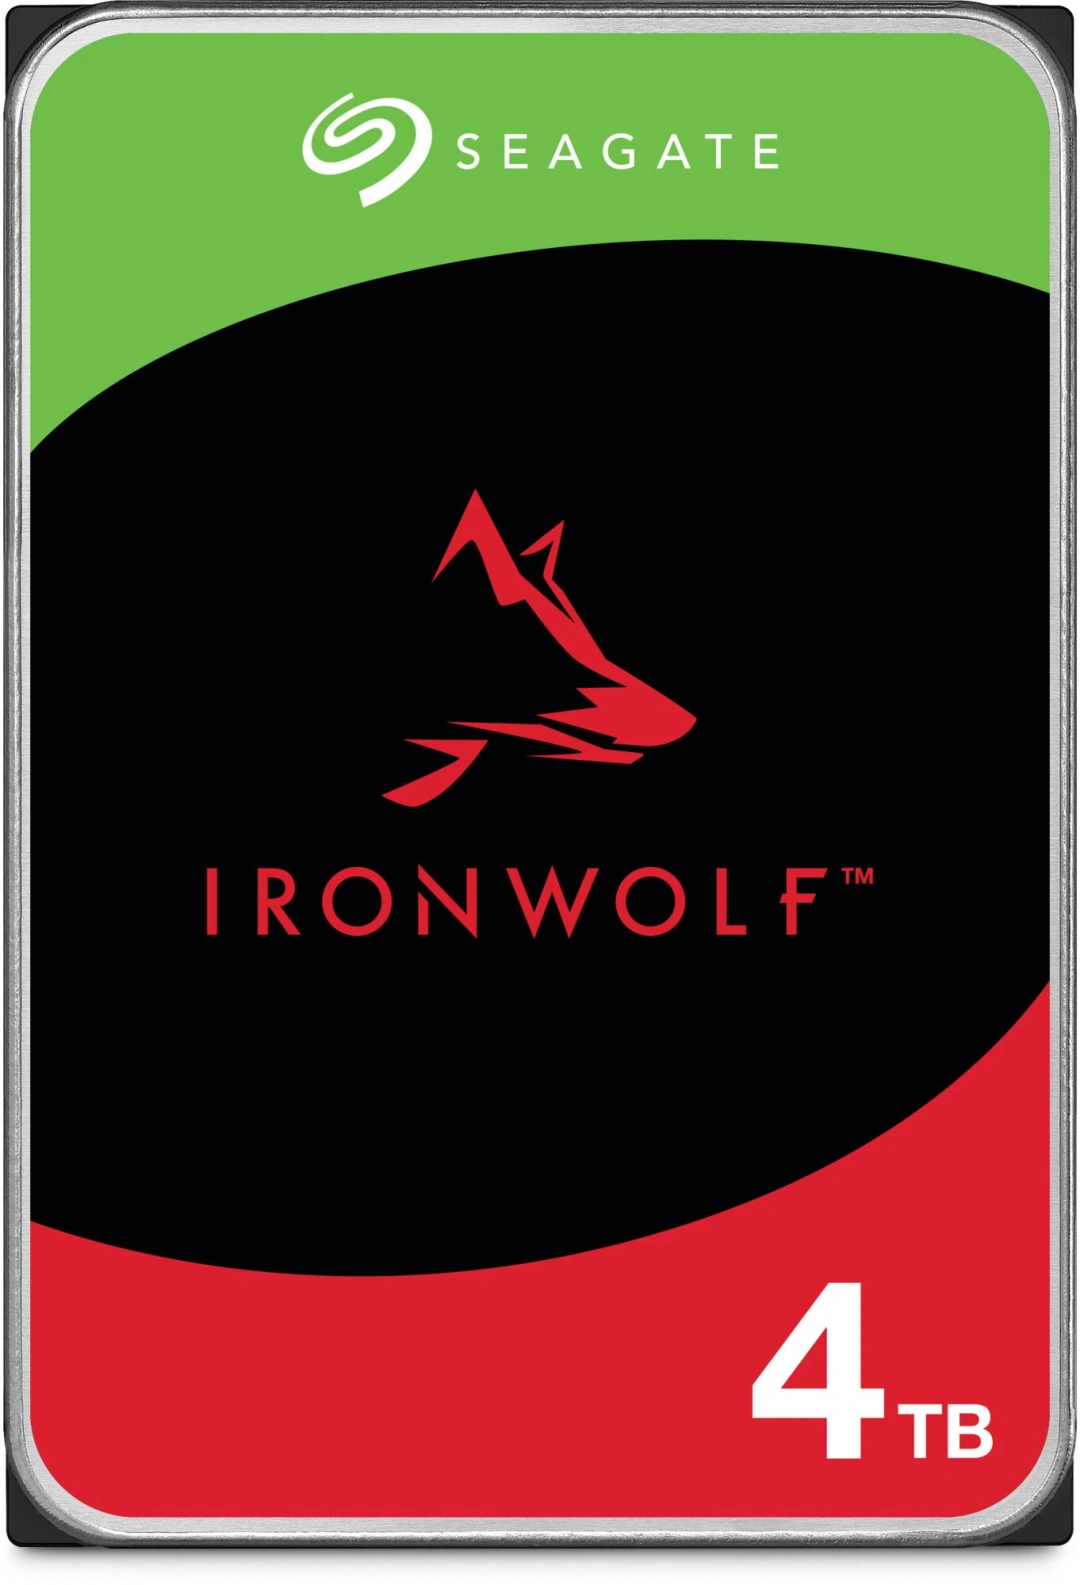 Seagate Ironwolf 4TB (ST4000VN006)